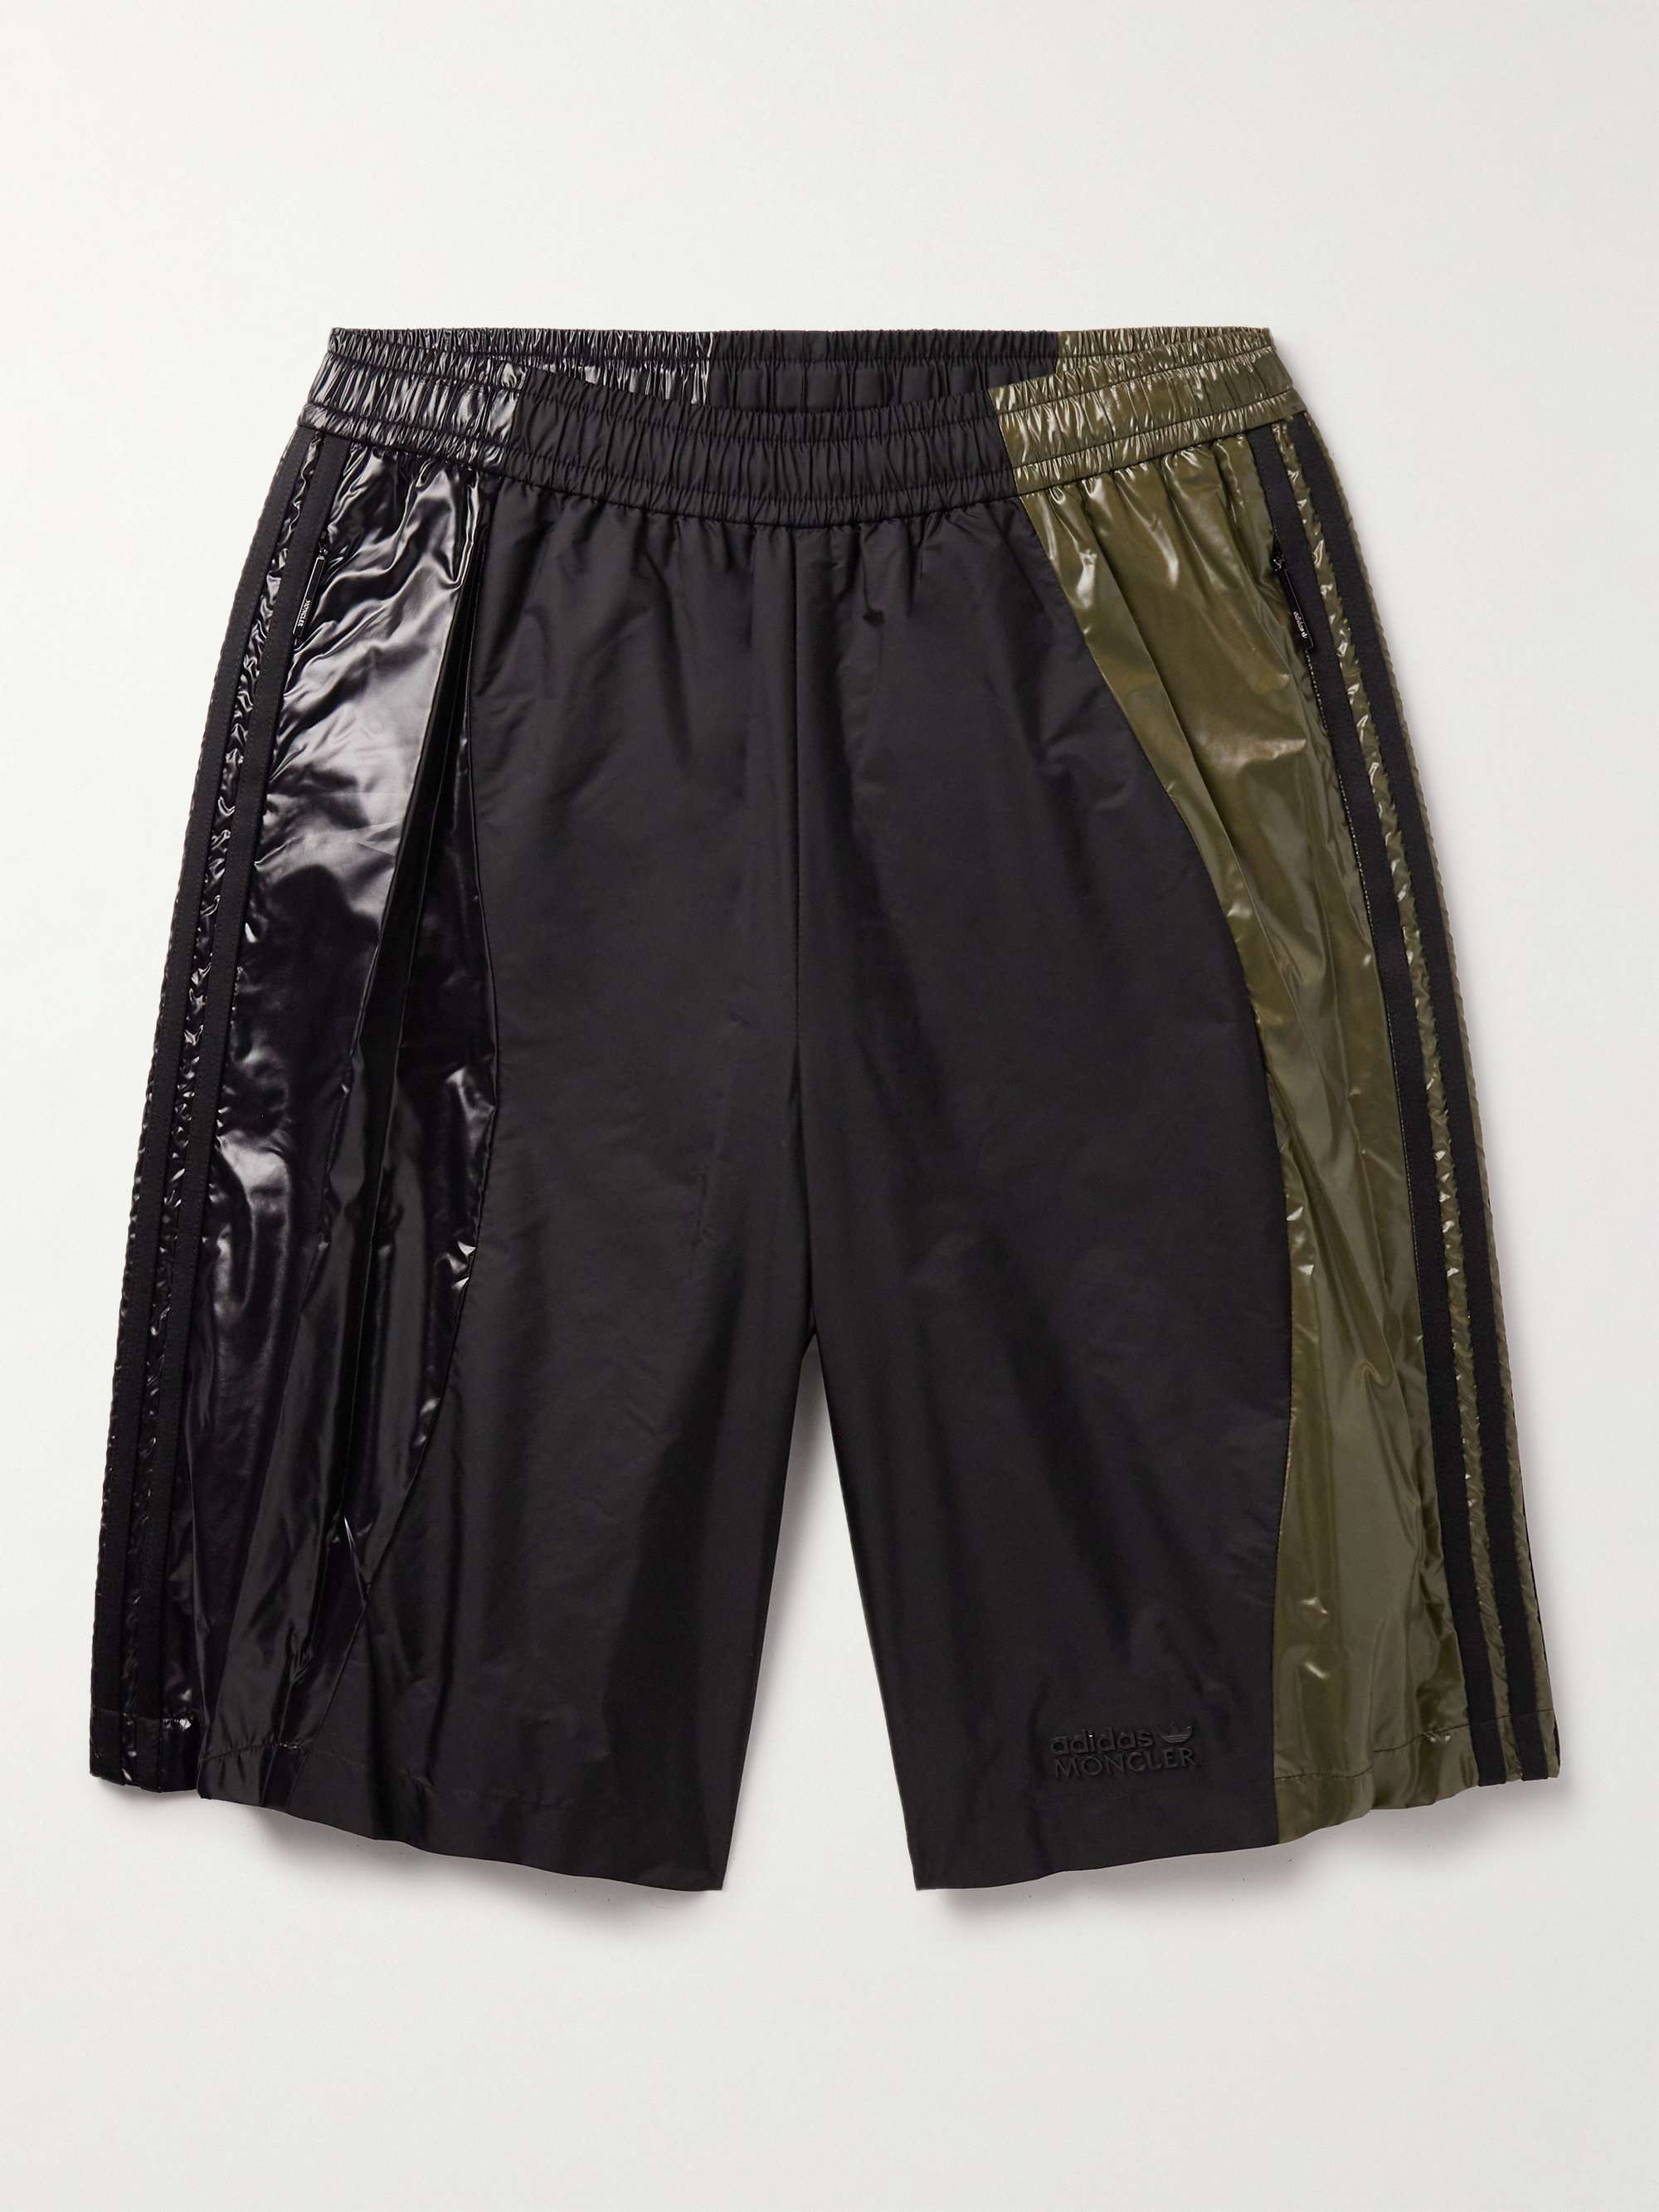 MONCLER GENIUS + adidas Originals Colour-Block Shell Shorts for Men | MR  PORTER